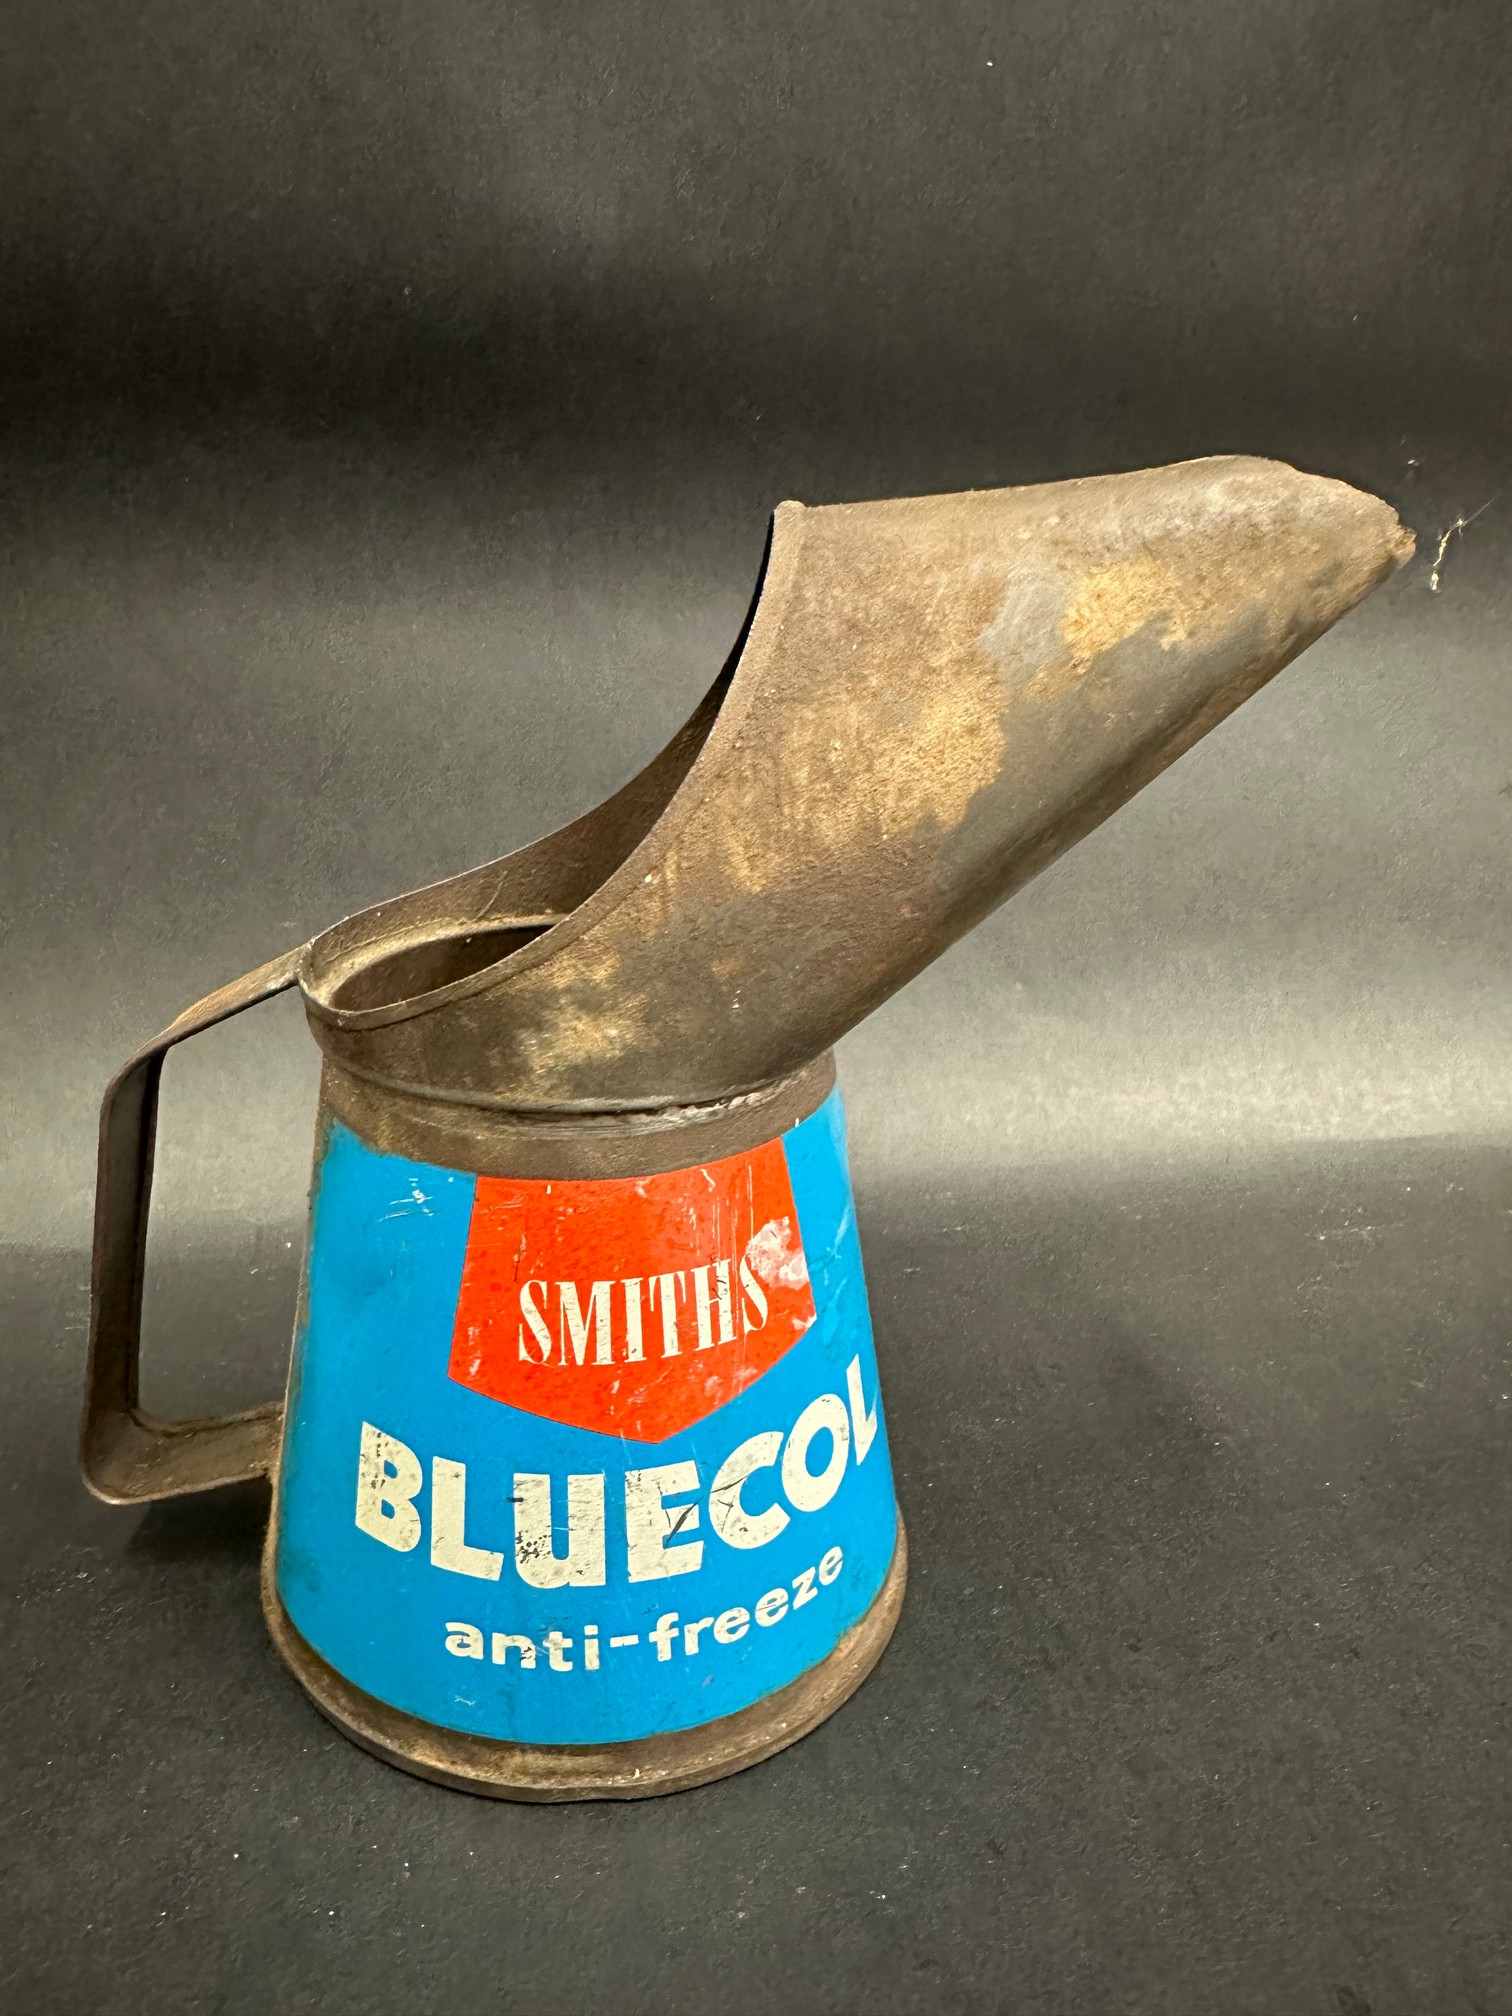 A Smiths Bluecol anti-freeze pint measure, dated 1961.